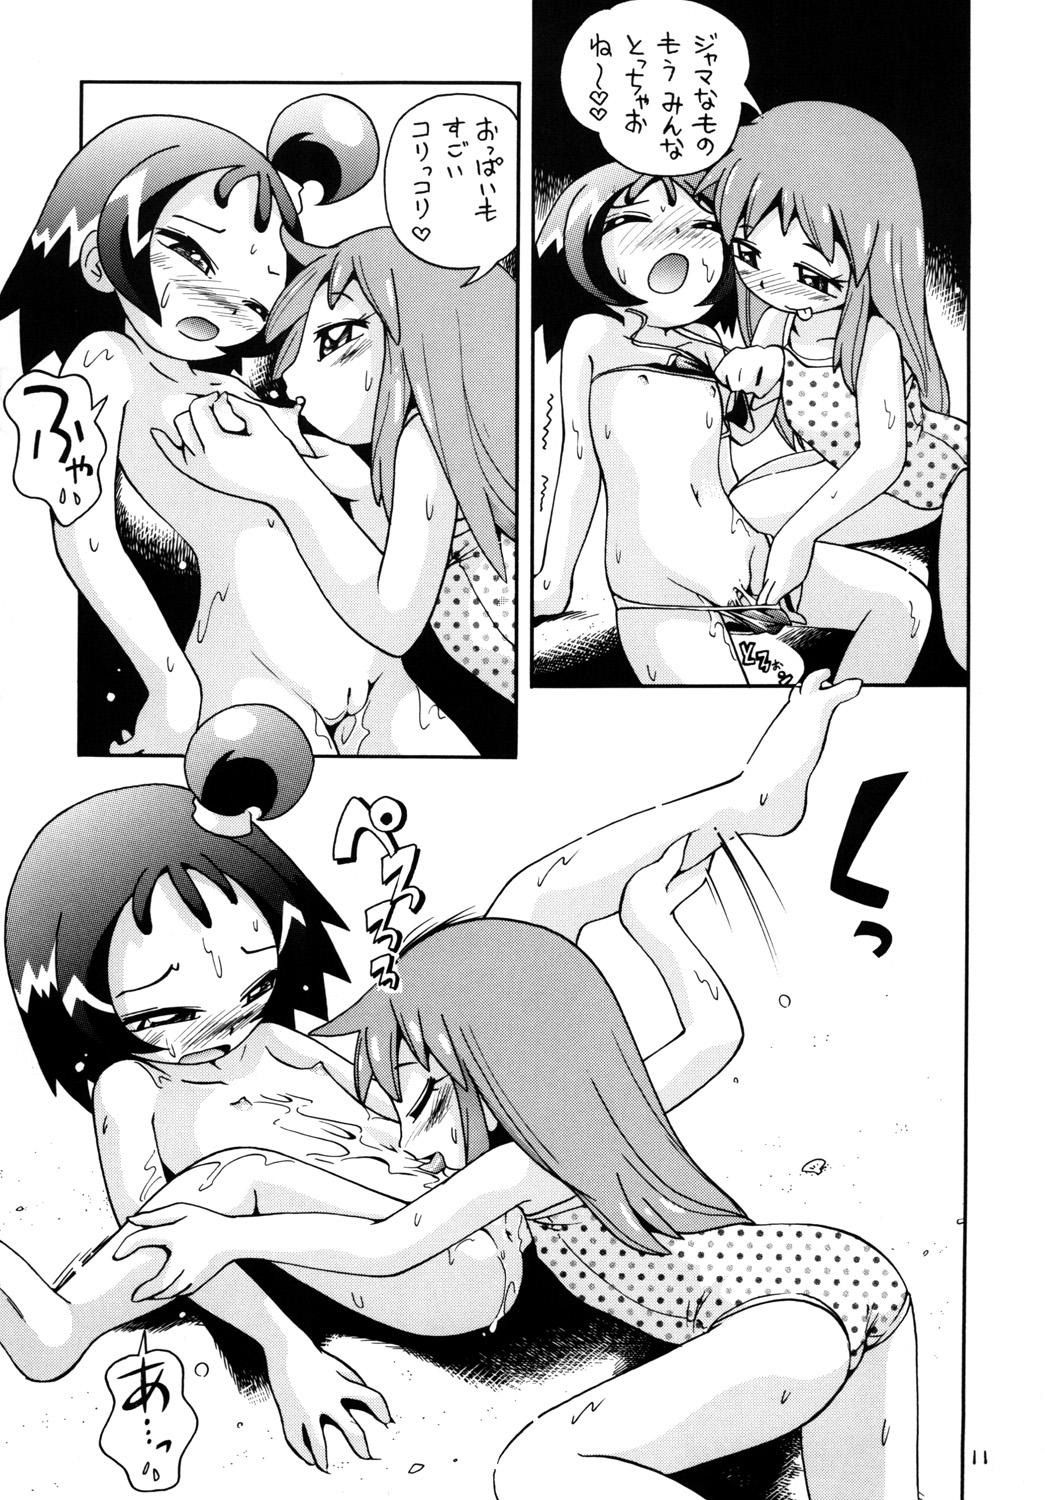 Butt Sex Puchi Pure - Ojamajo doremi Azumanga daioh 18 Year Old Porn - Page 10